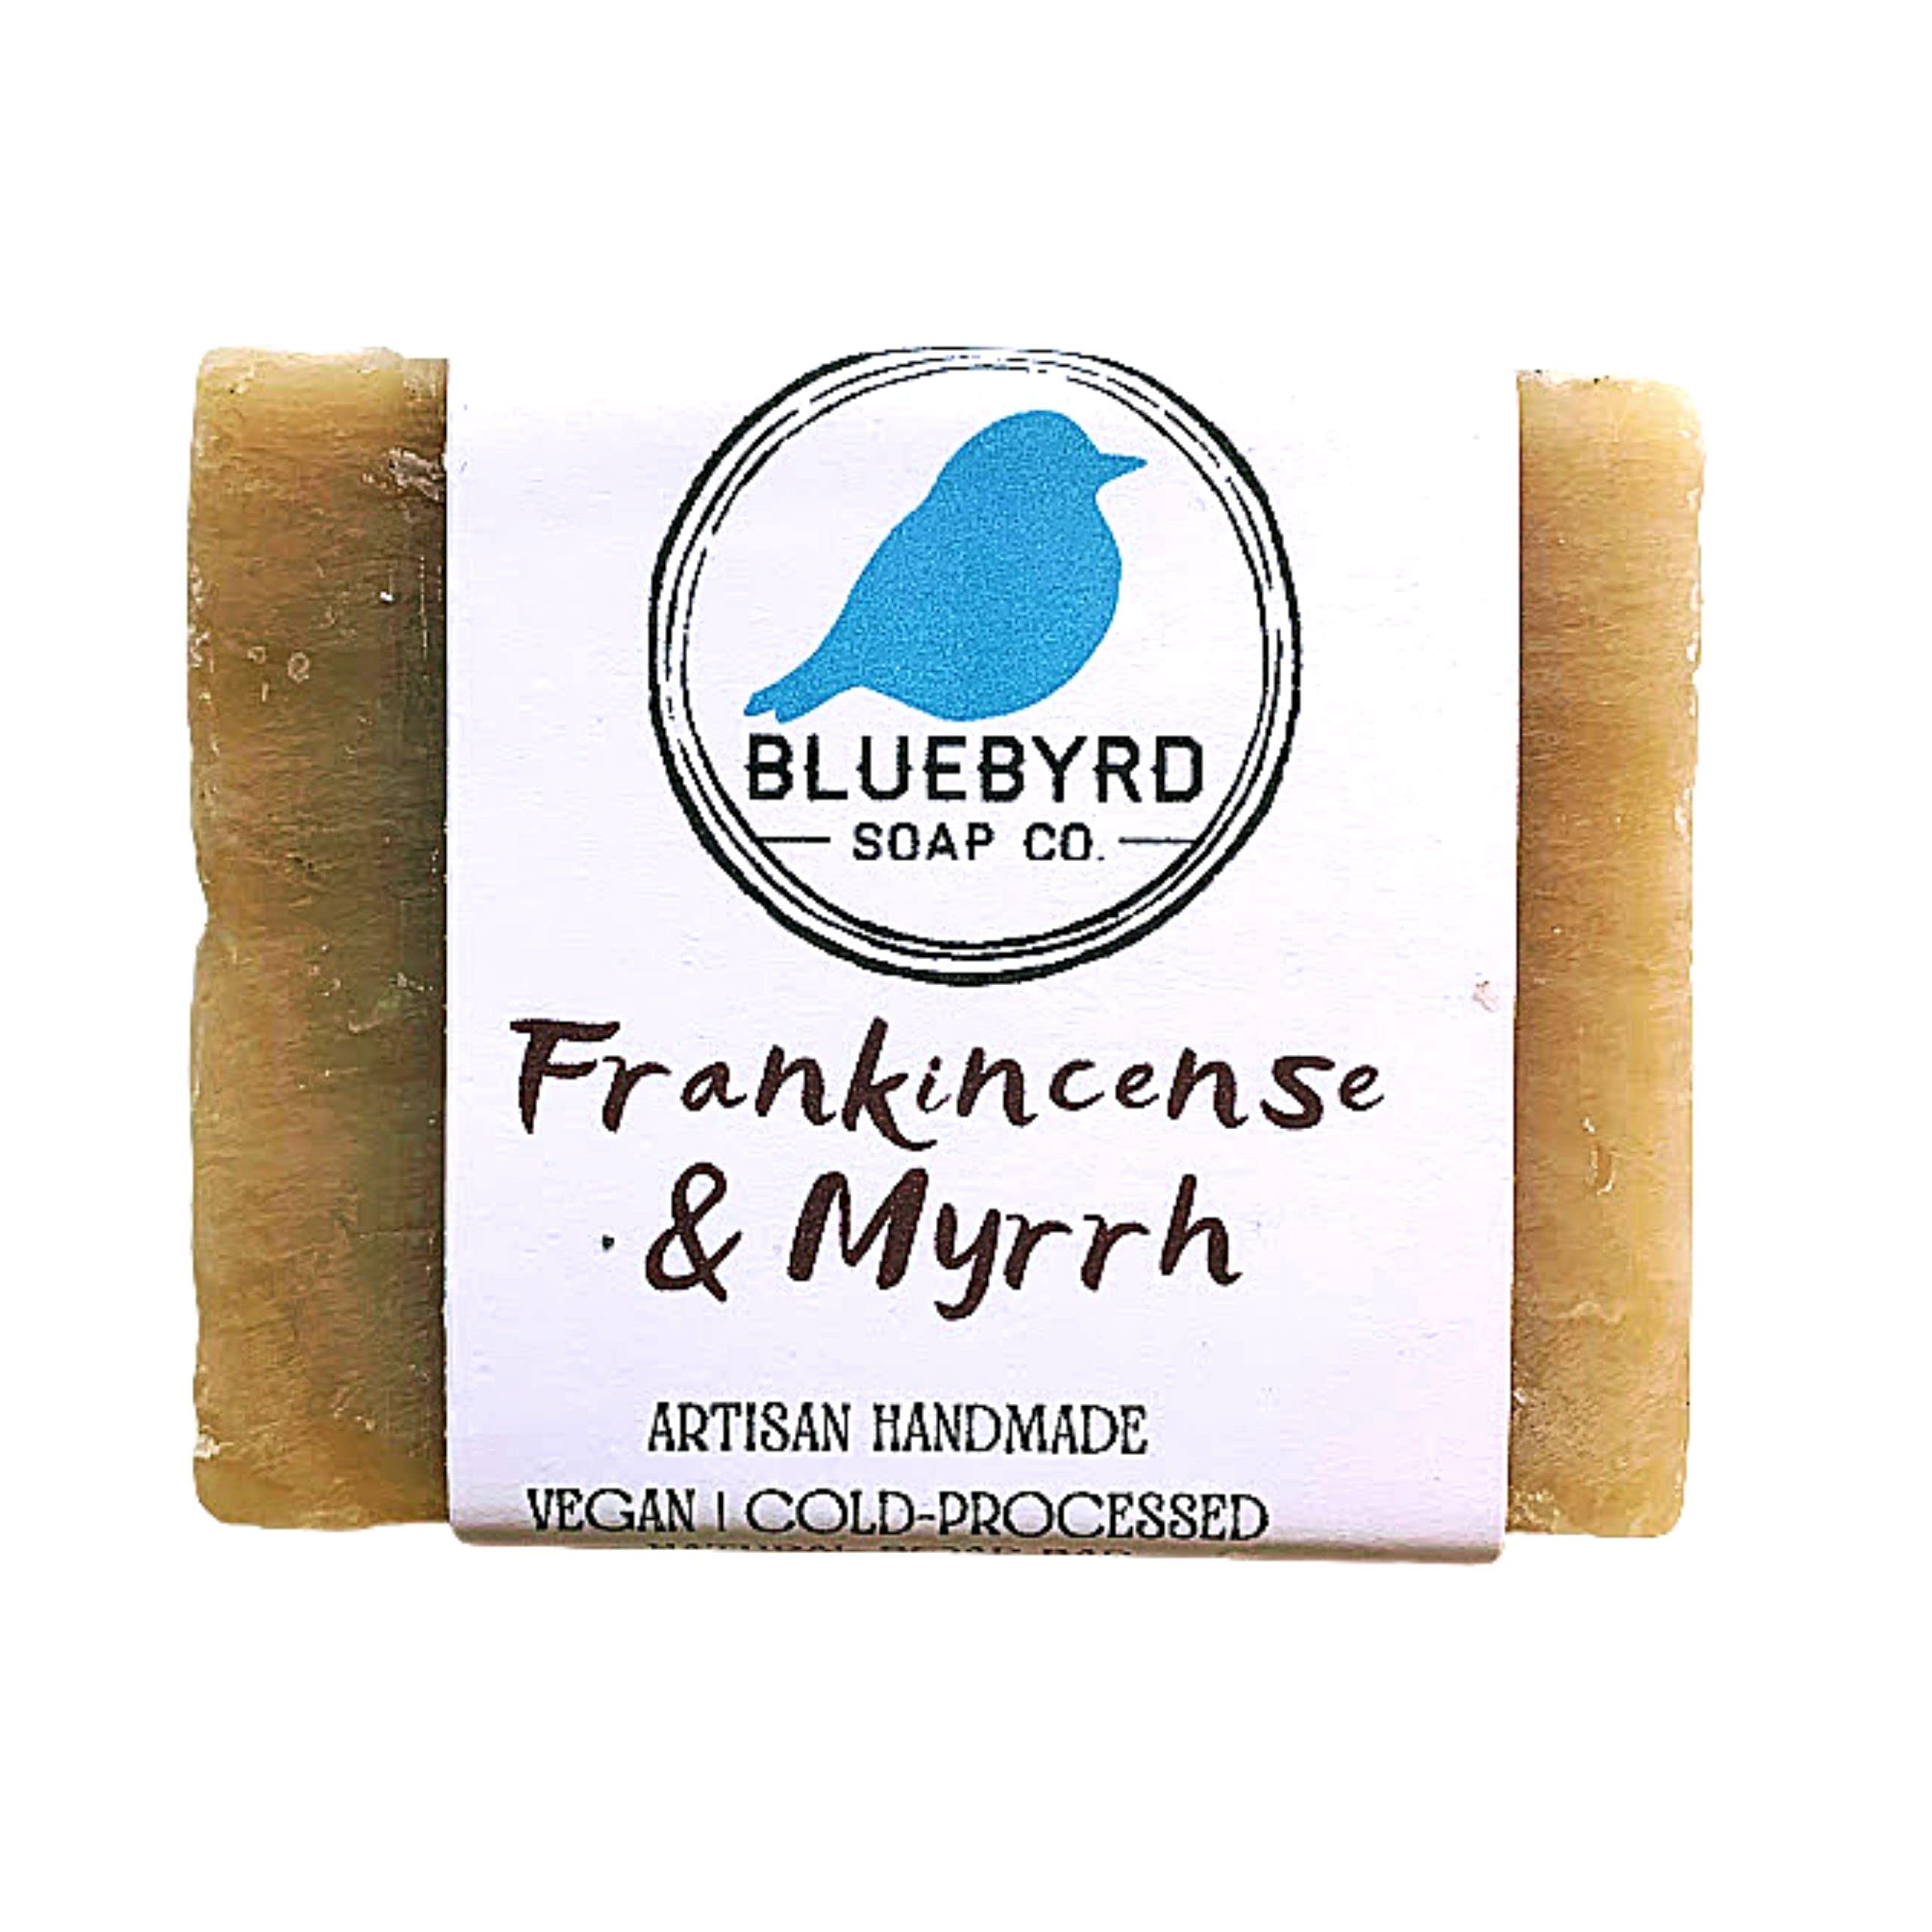 All Natural Frankincense and Myrrh Soap Bar